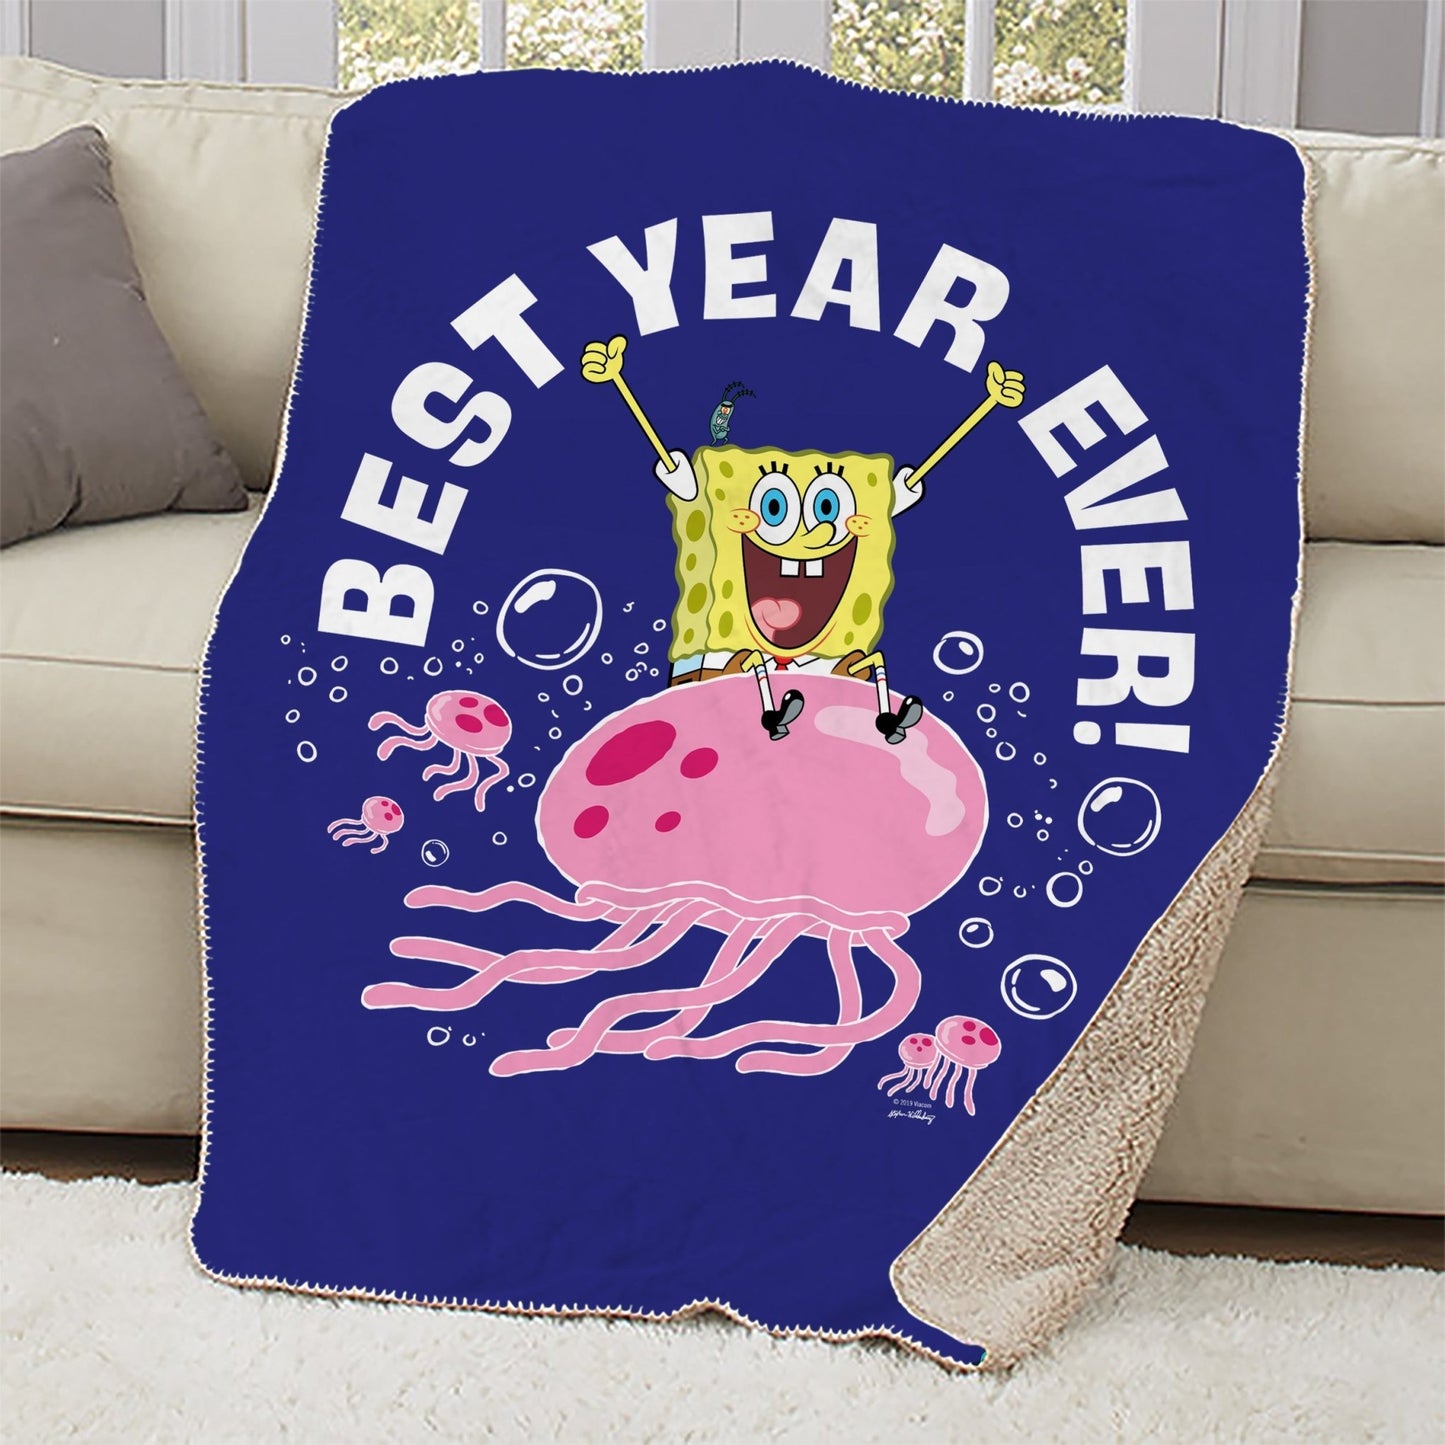 SpongeBob SquarePants Best Year Ever Jellyfish Sherpa Blanket - Paramount Shop